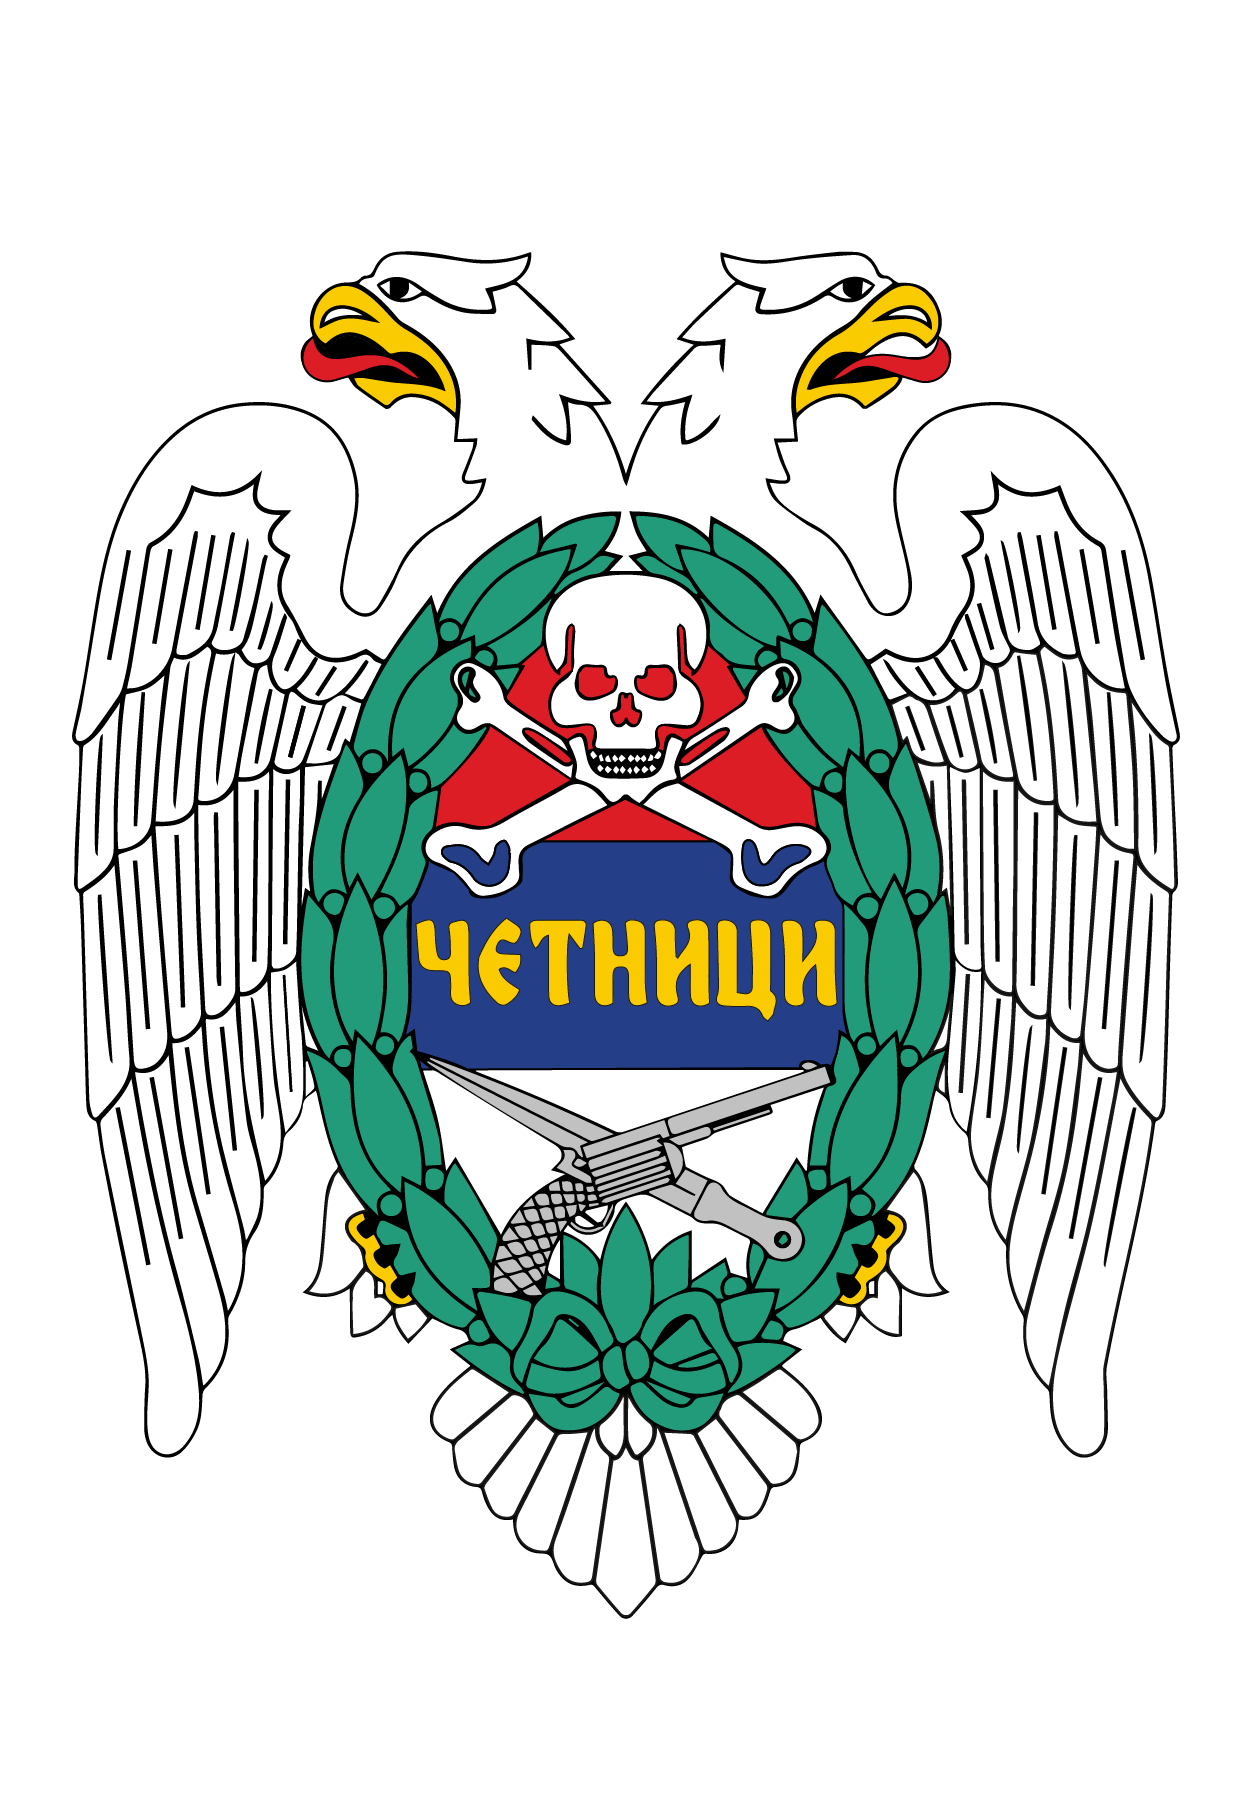 Serbian Chetniks Australia